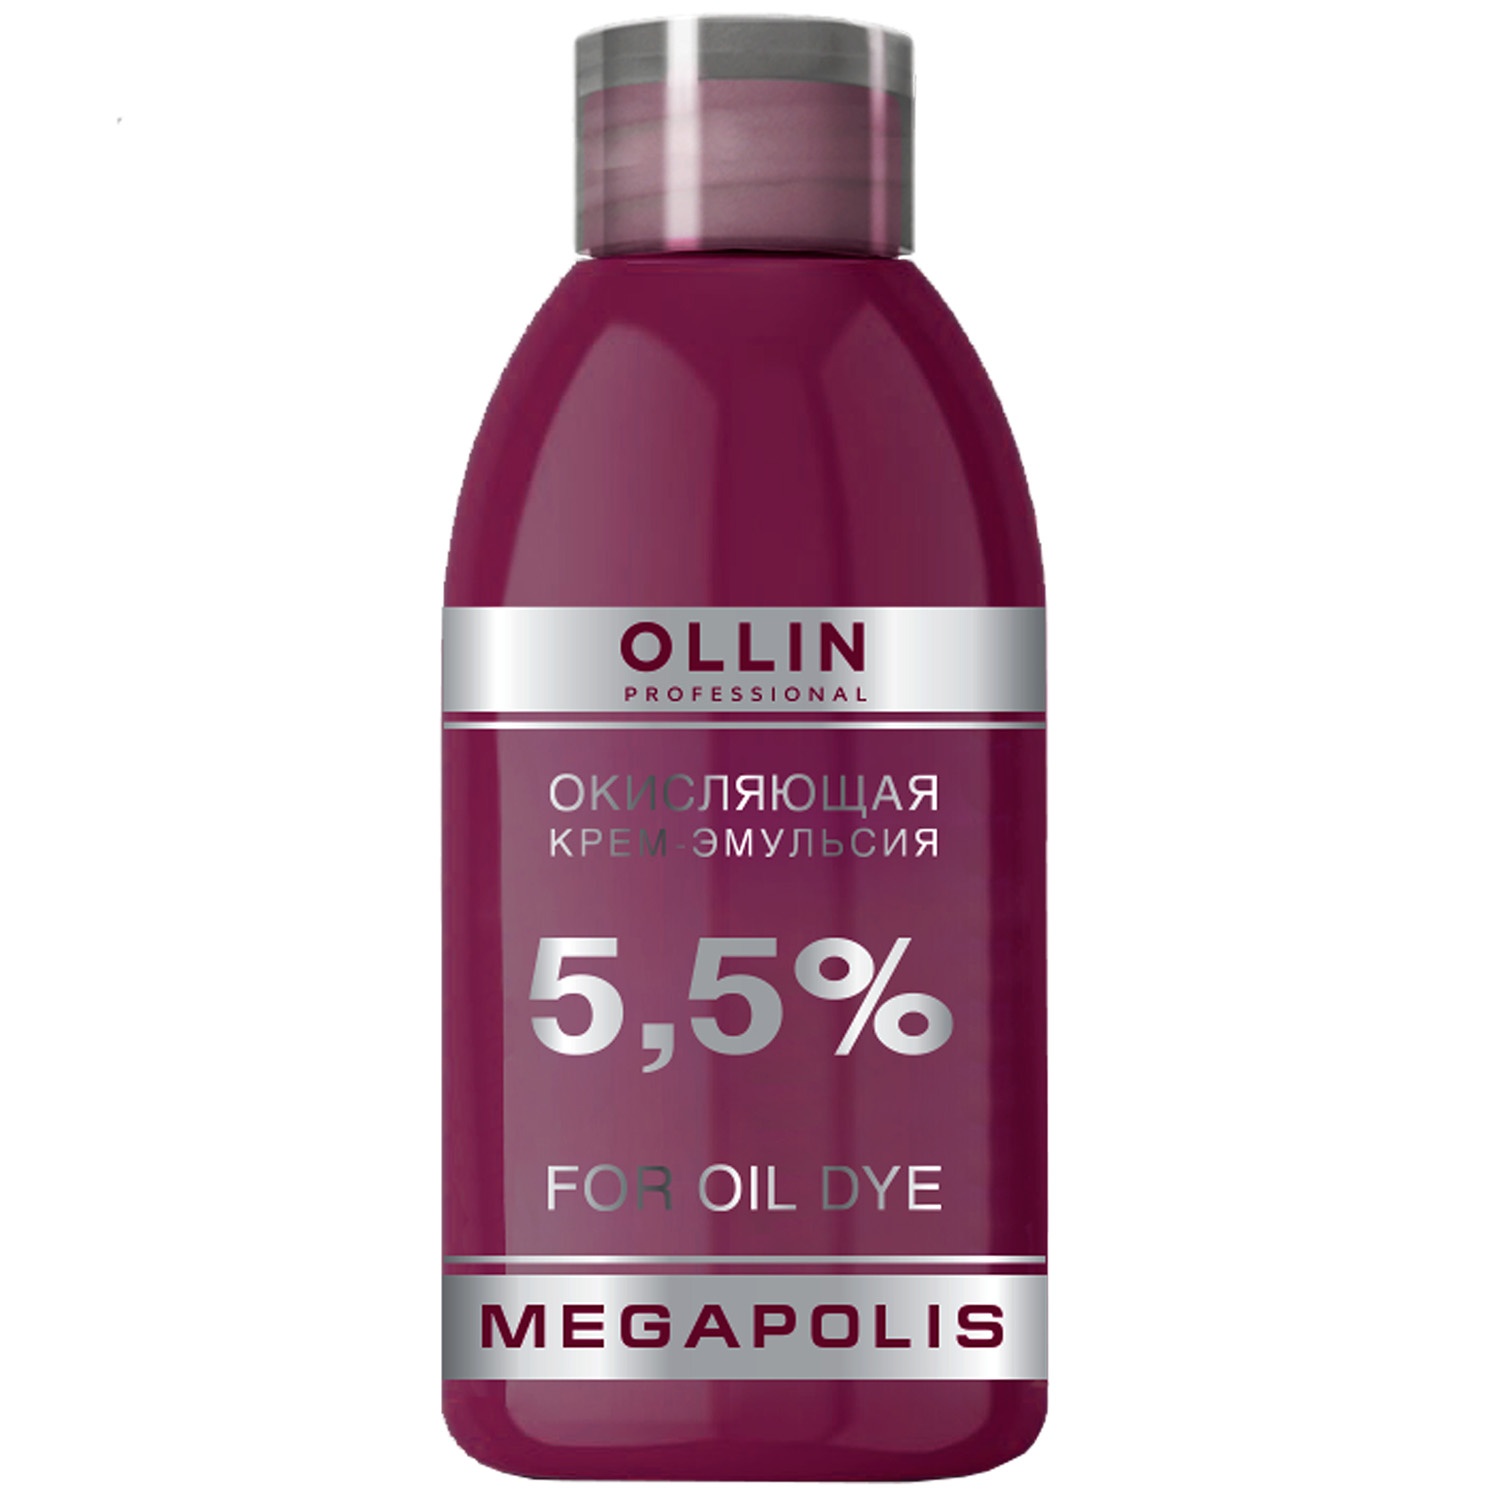 Ollin Professional Окисляющая крем-эмульсия 5,5%, 75 мл (Ollin Professional, Megapolis) крем эмульсия окисляющая ollin professional megapolis 2 7% 75 мл